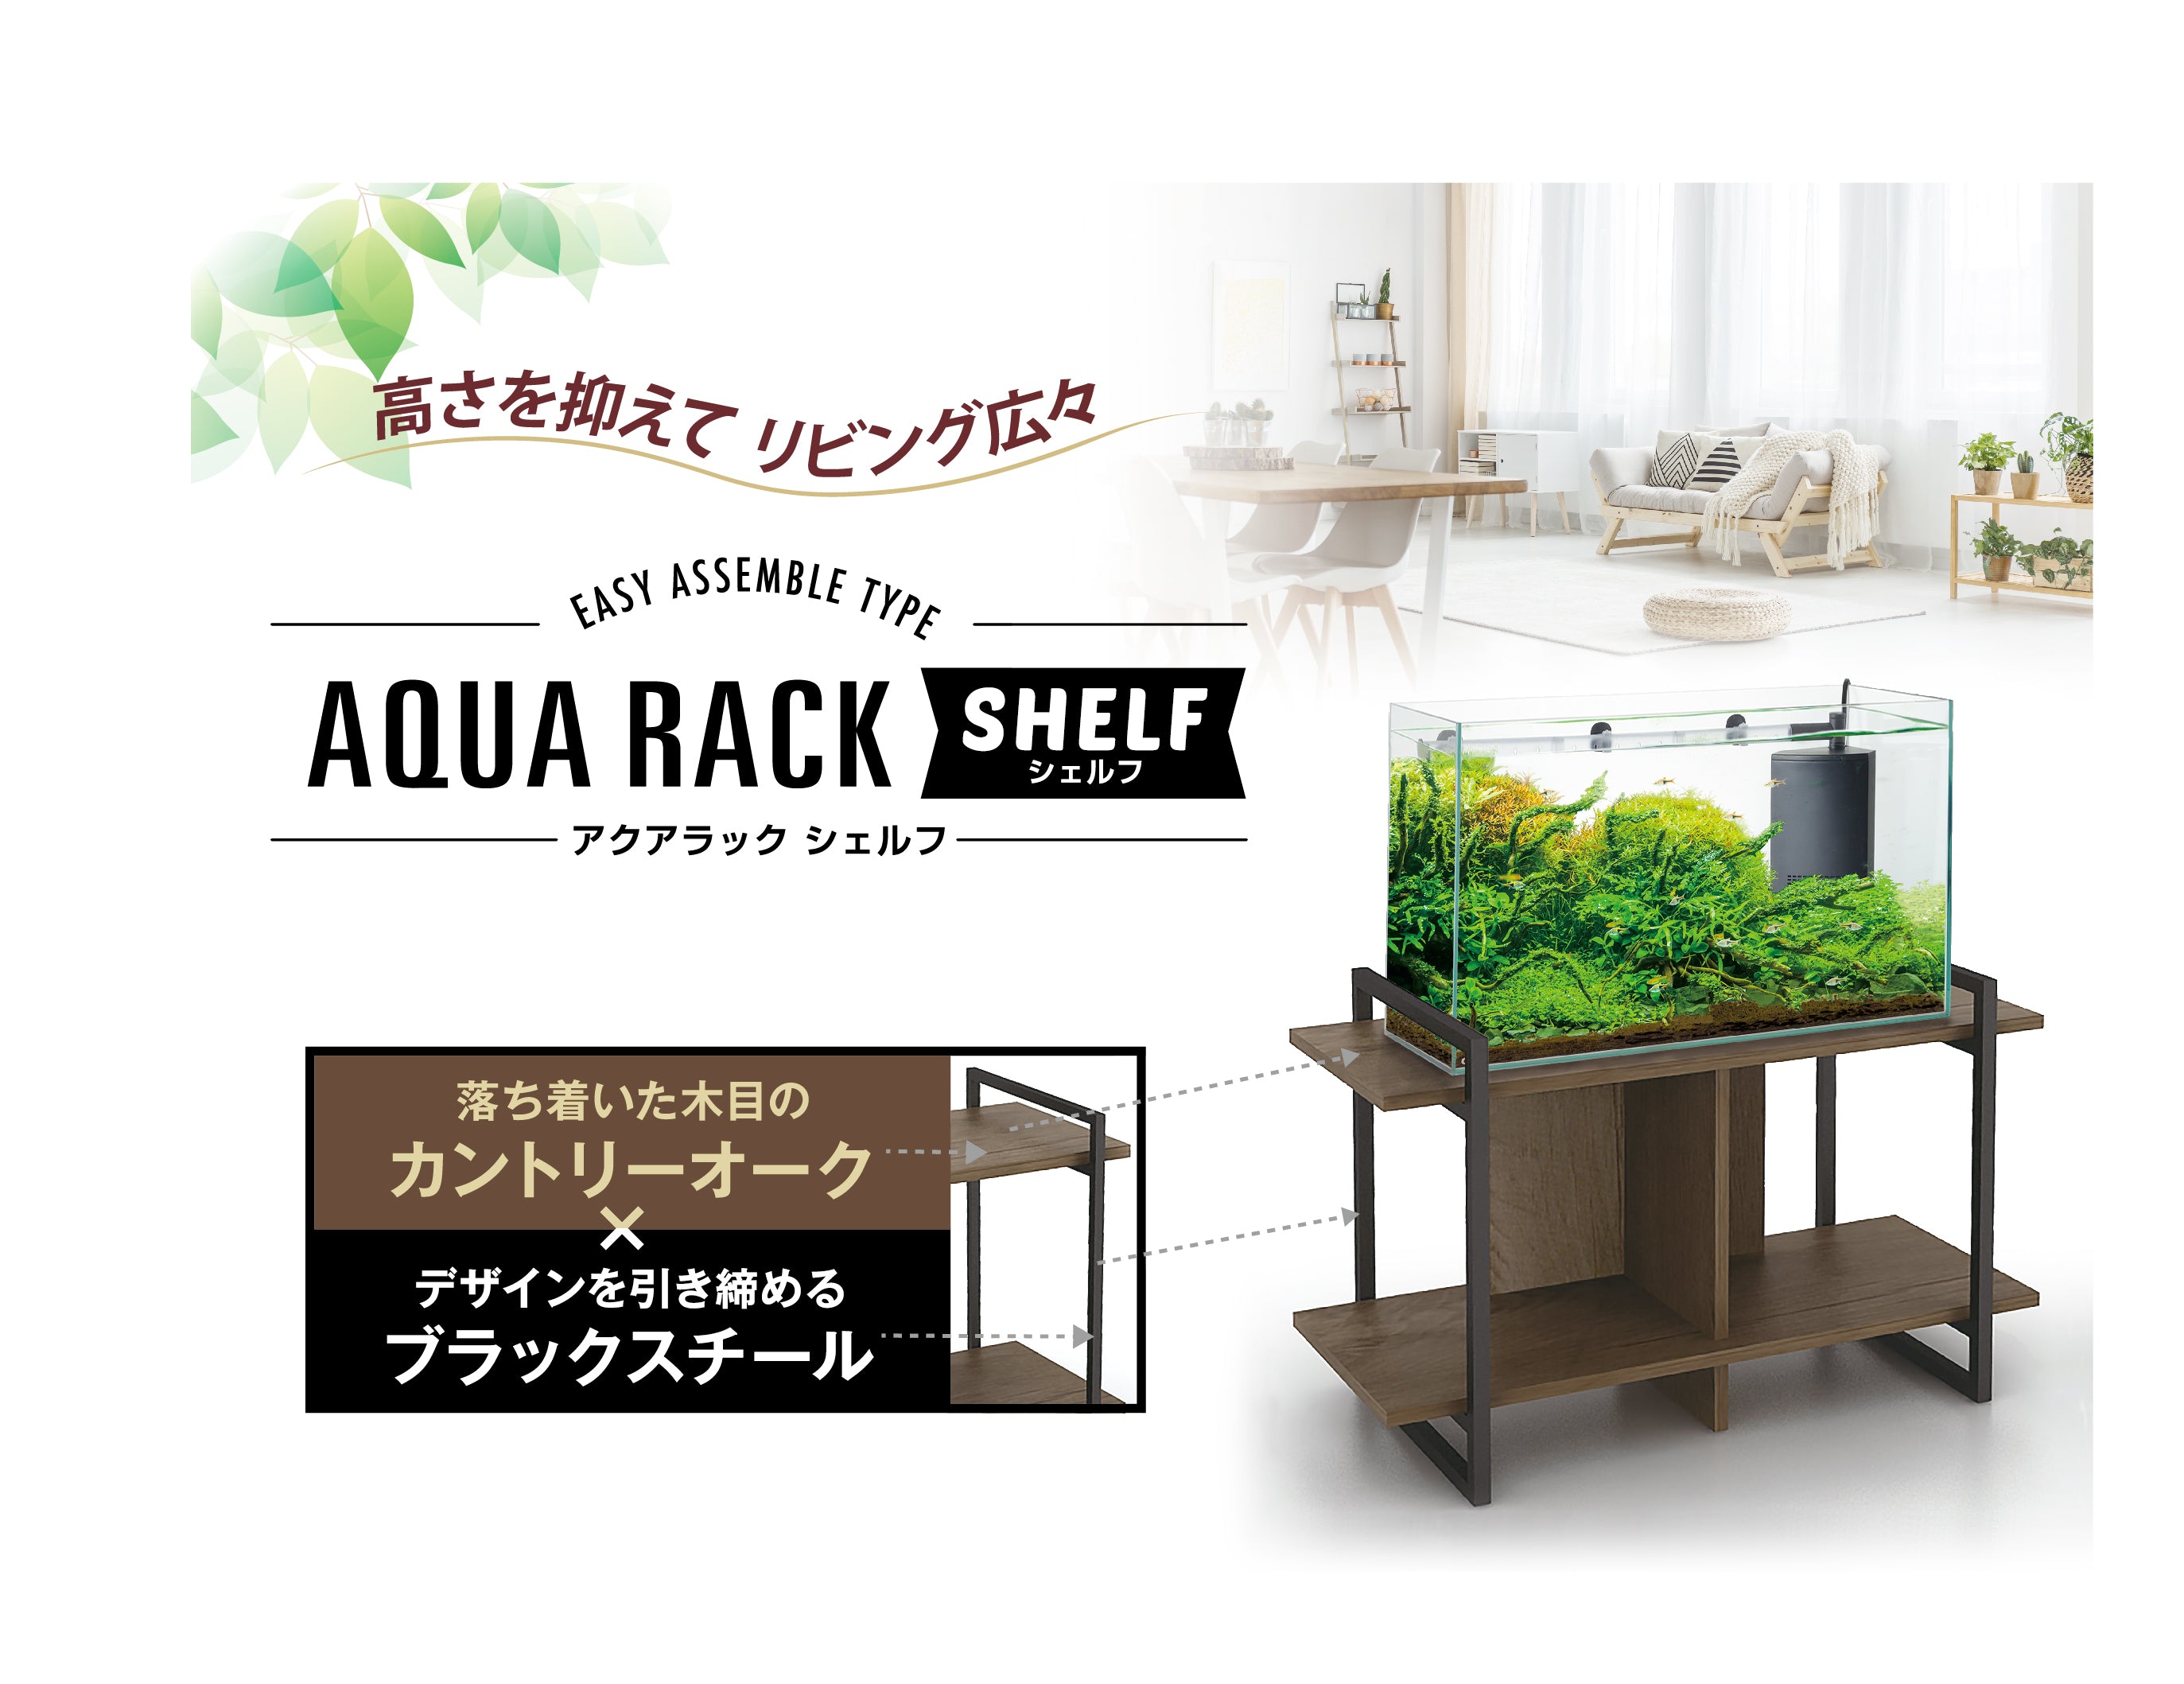 Aqua rack shekf  60cm 木櫃 GEX